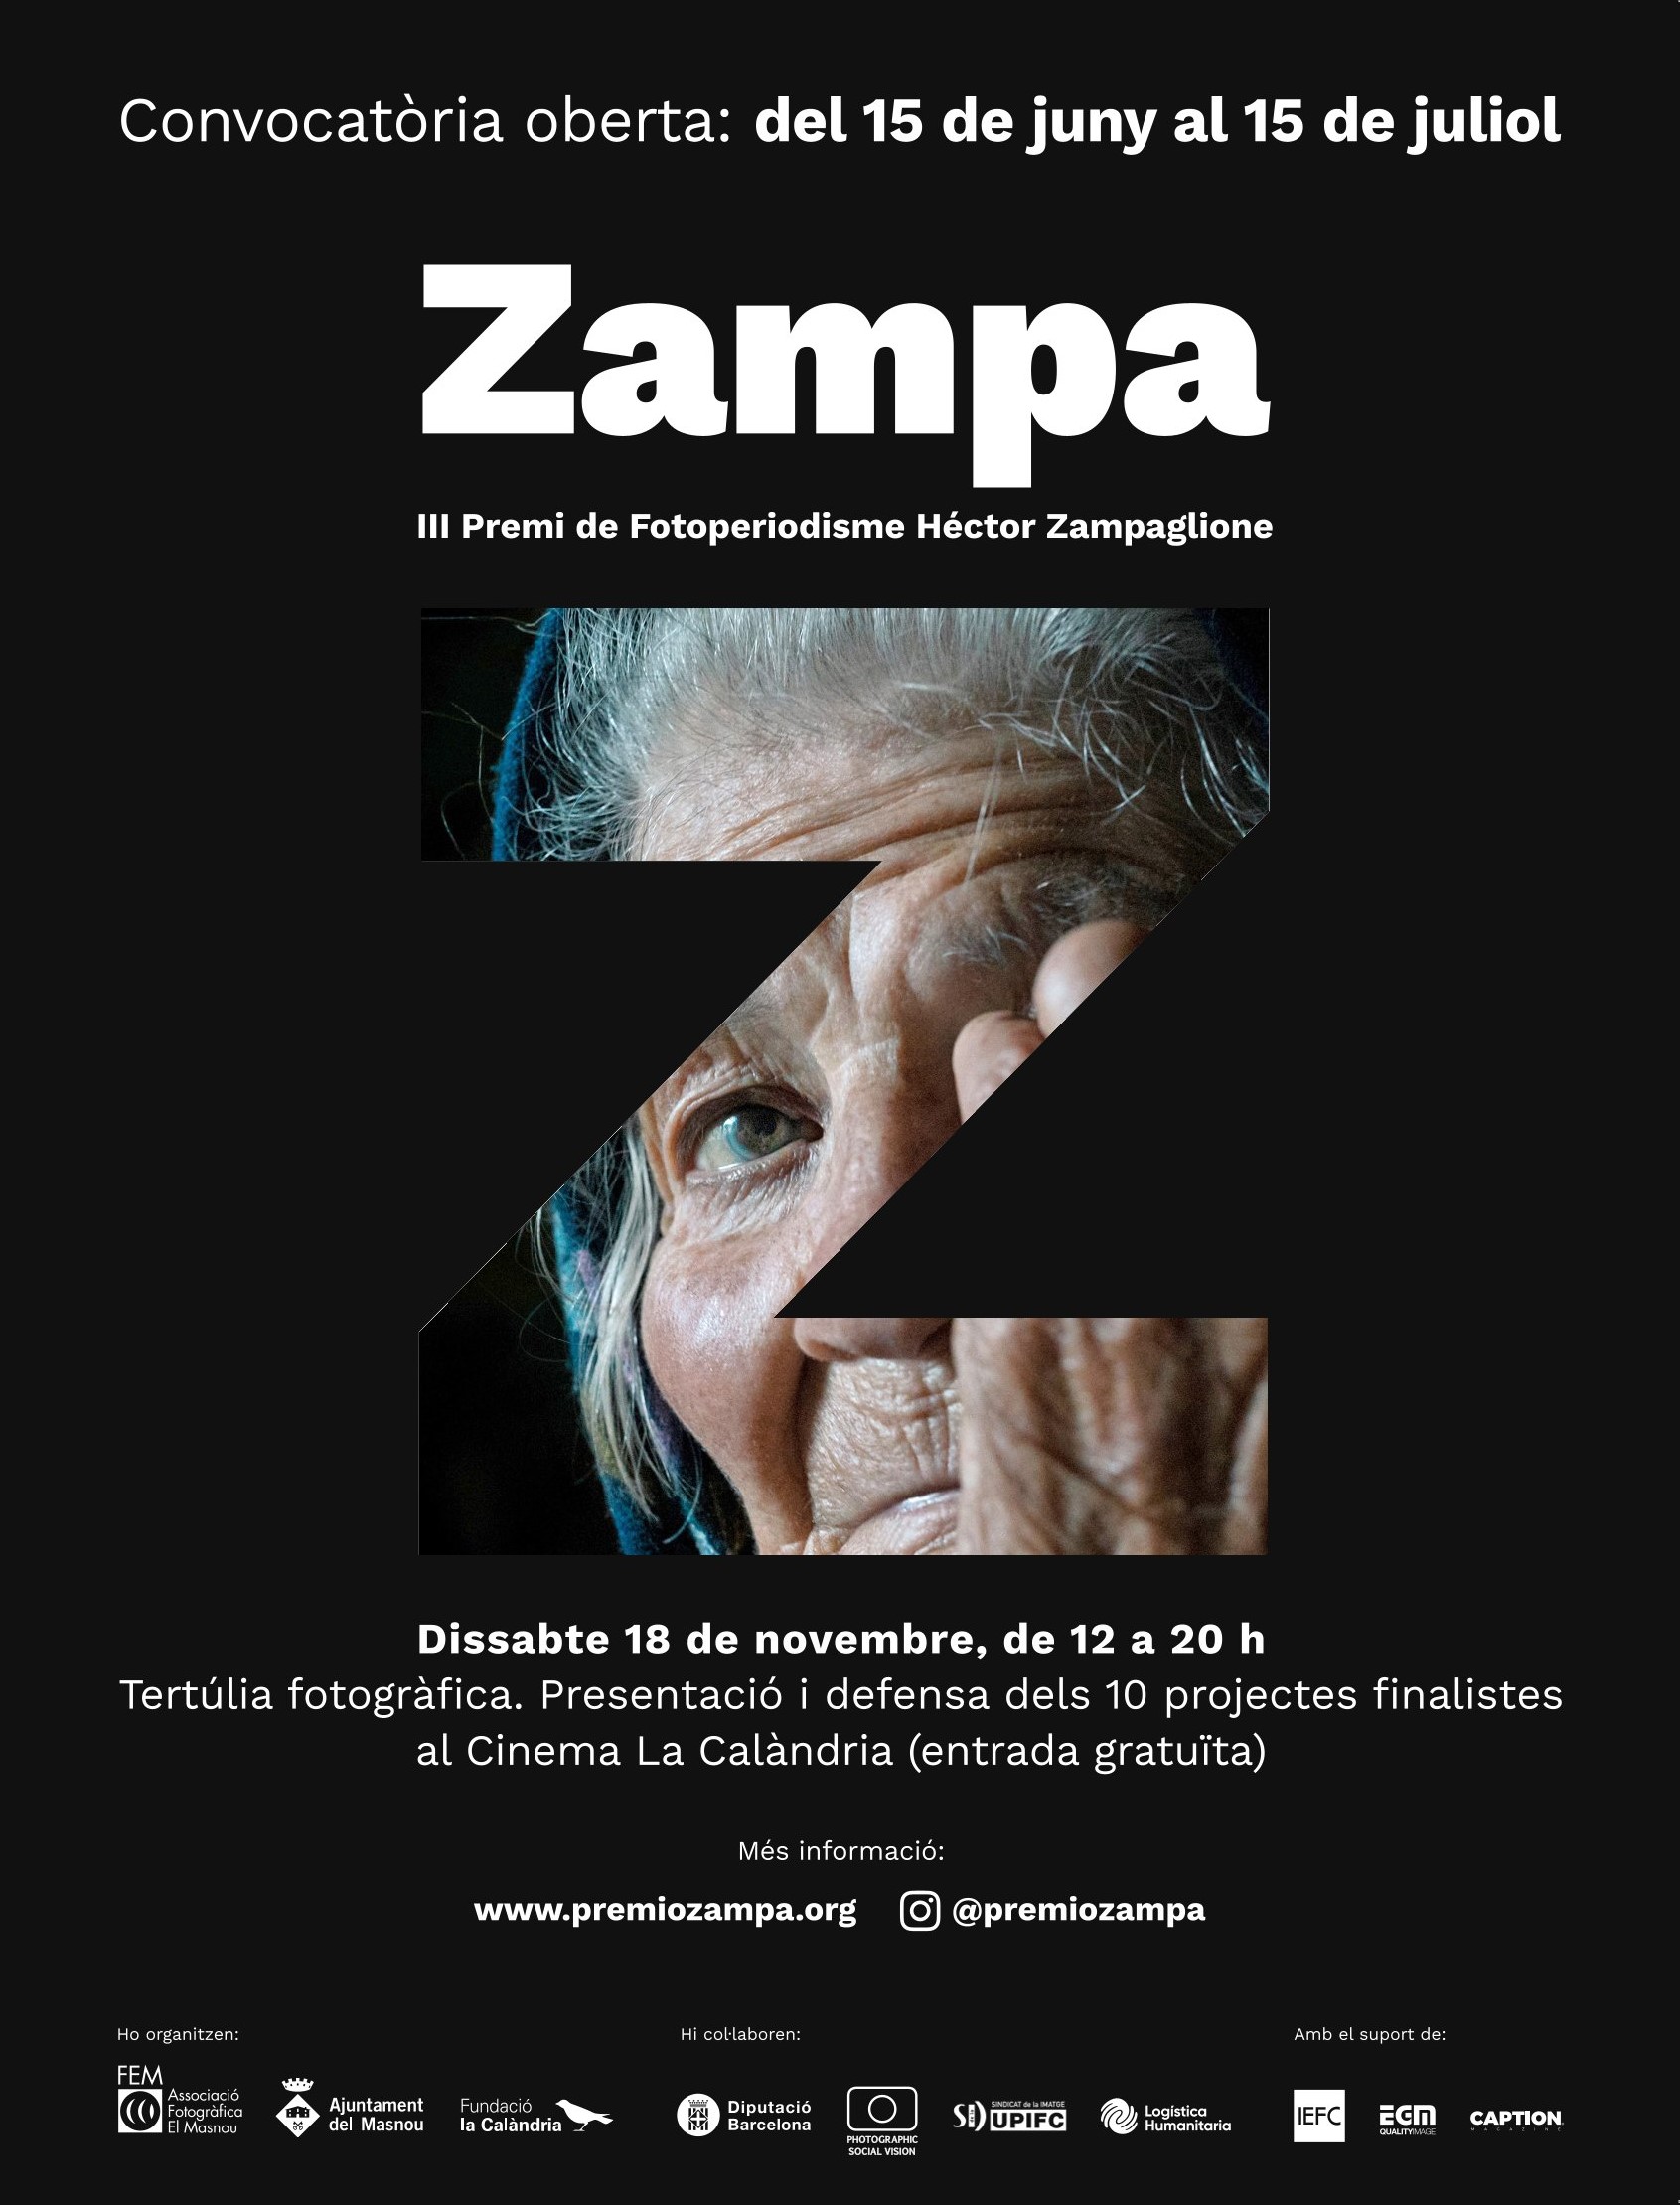 Premi de Fotoperiodisme Héctor Zampaglione: es poden presentar candidatures fins al 15 de juliol